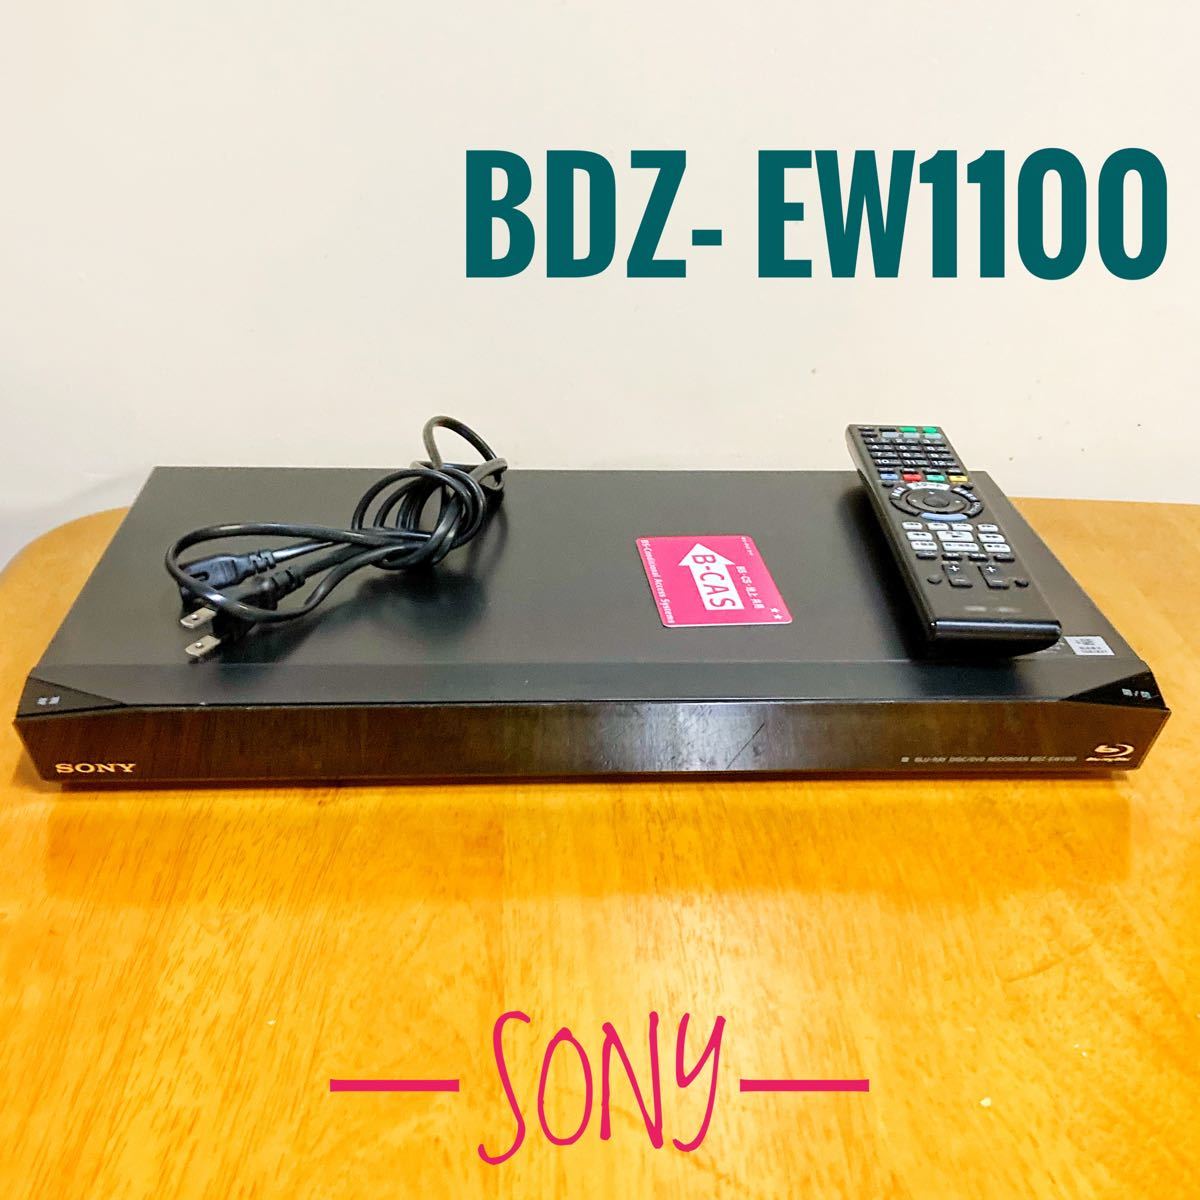 SONY BDZ-EW1100 2番組録画ブルーレイレコーダー - library